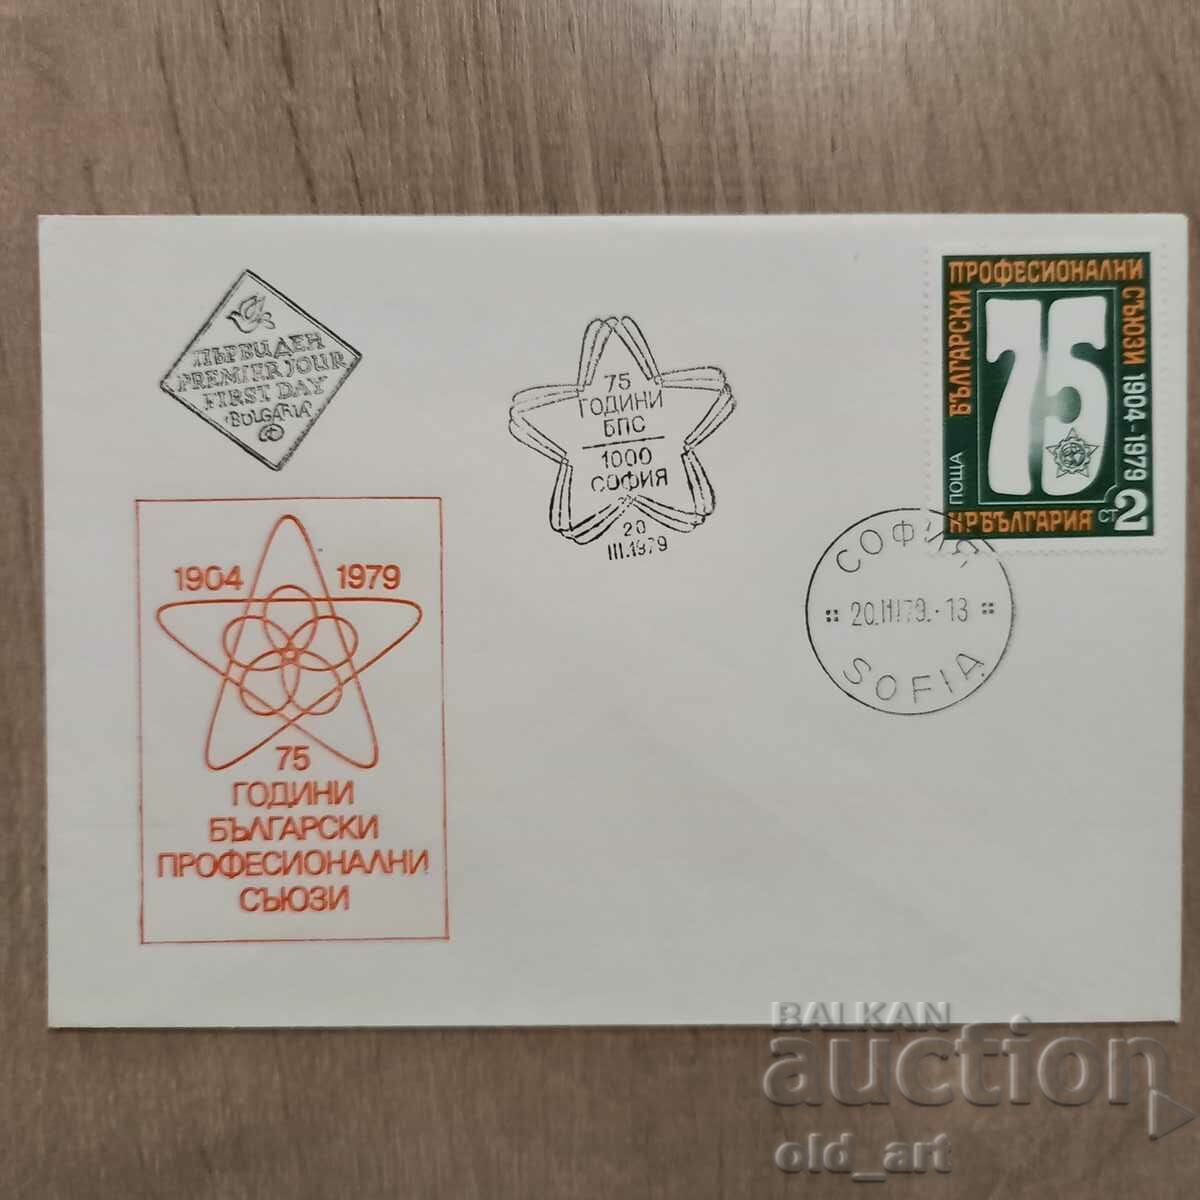 Postal envelope - 75 years. Bulgarian trade unions